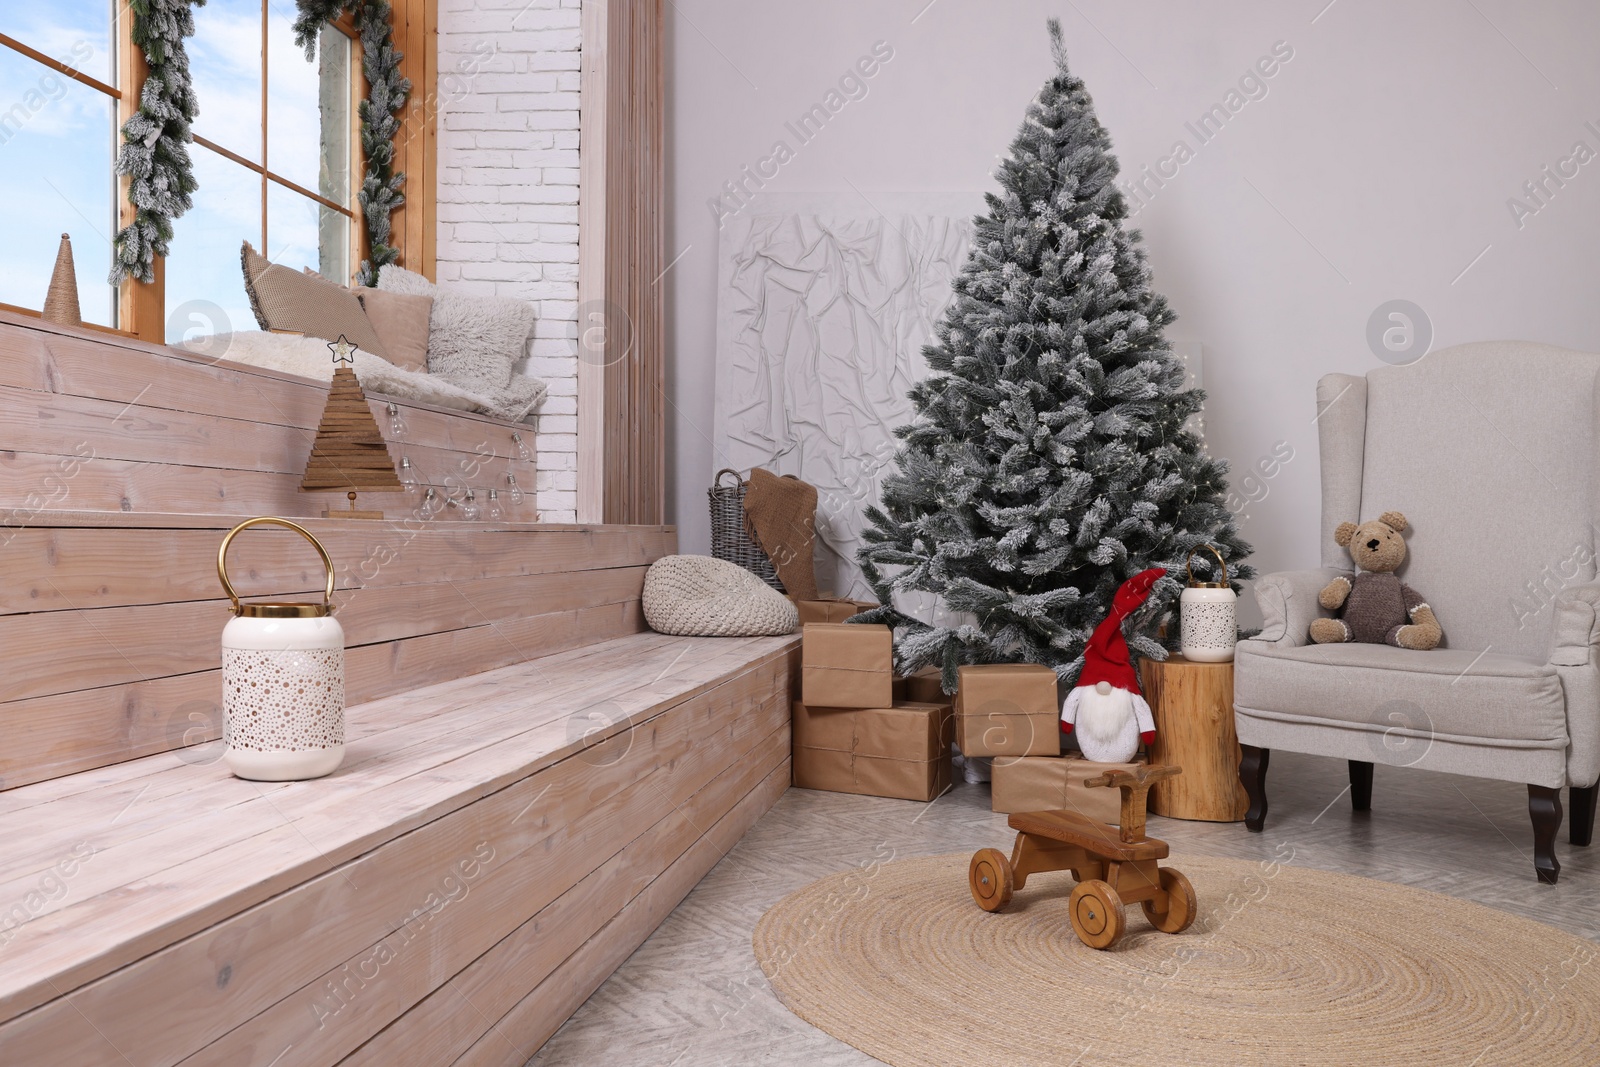 Photo of Stylish room interior with Christmas tree and festive decor